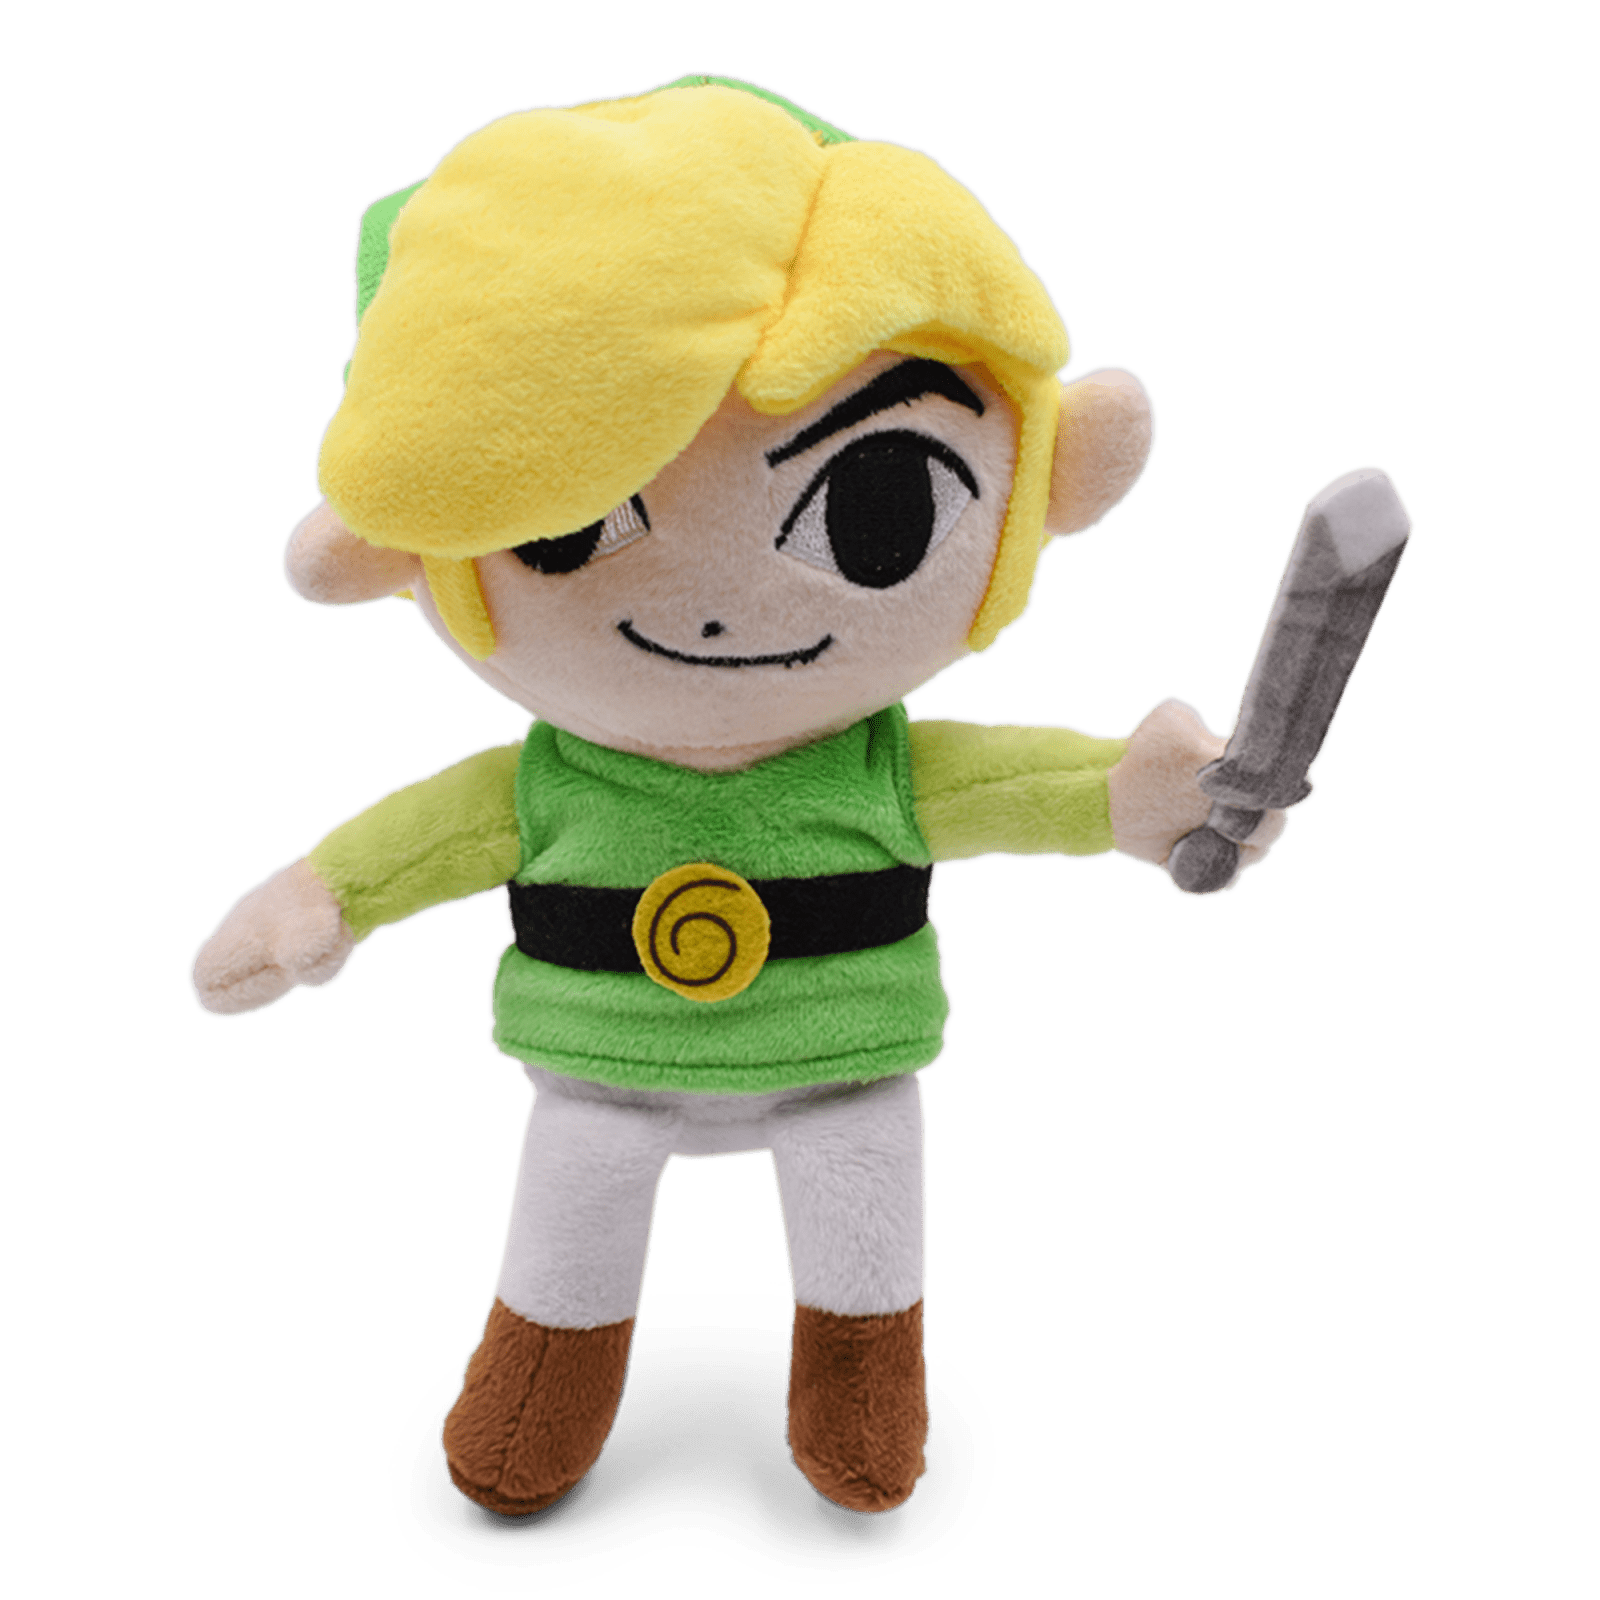 NEW The Legend of Zelda Game Plush Link Soft Toy Doll Stuffed Animal Teddy 7" 